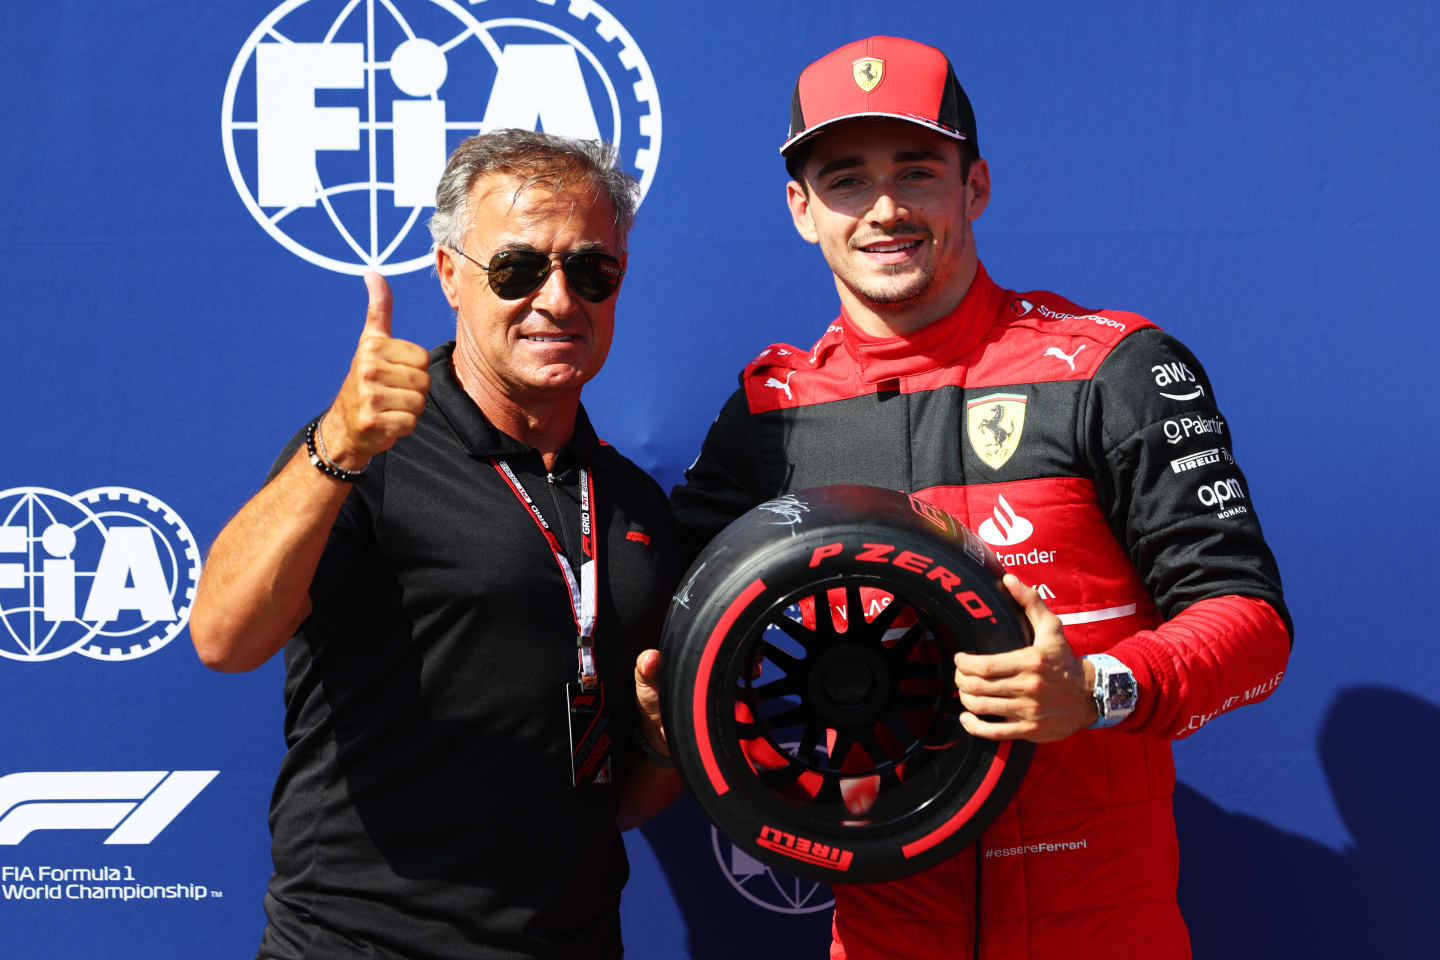 LE CASTELLET, FRANCE - JULY 23: Pole position qualifier Charles Leclerc of Monaco and Ferrari is